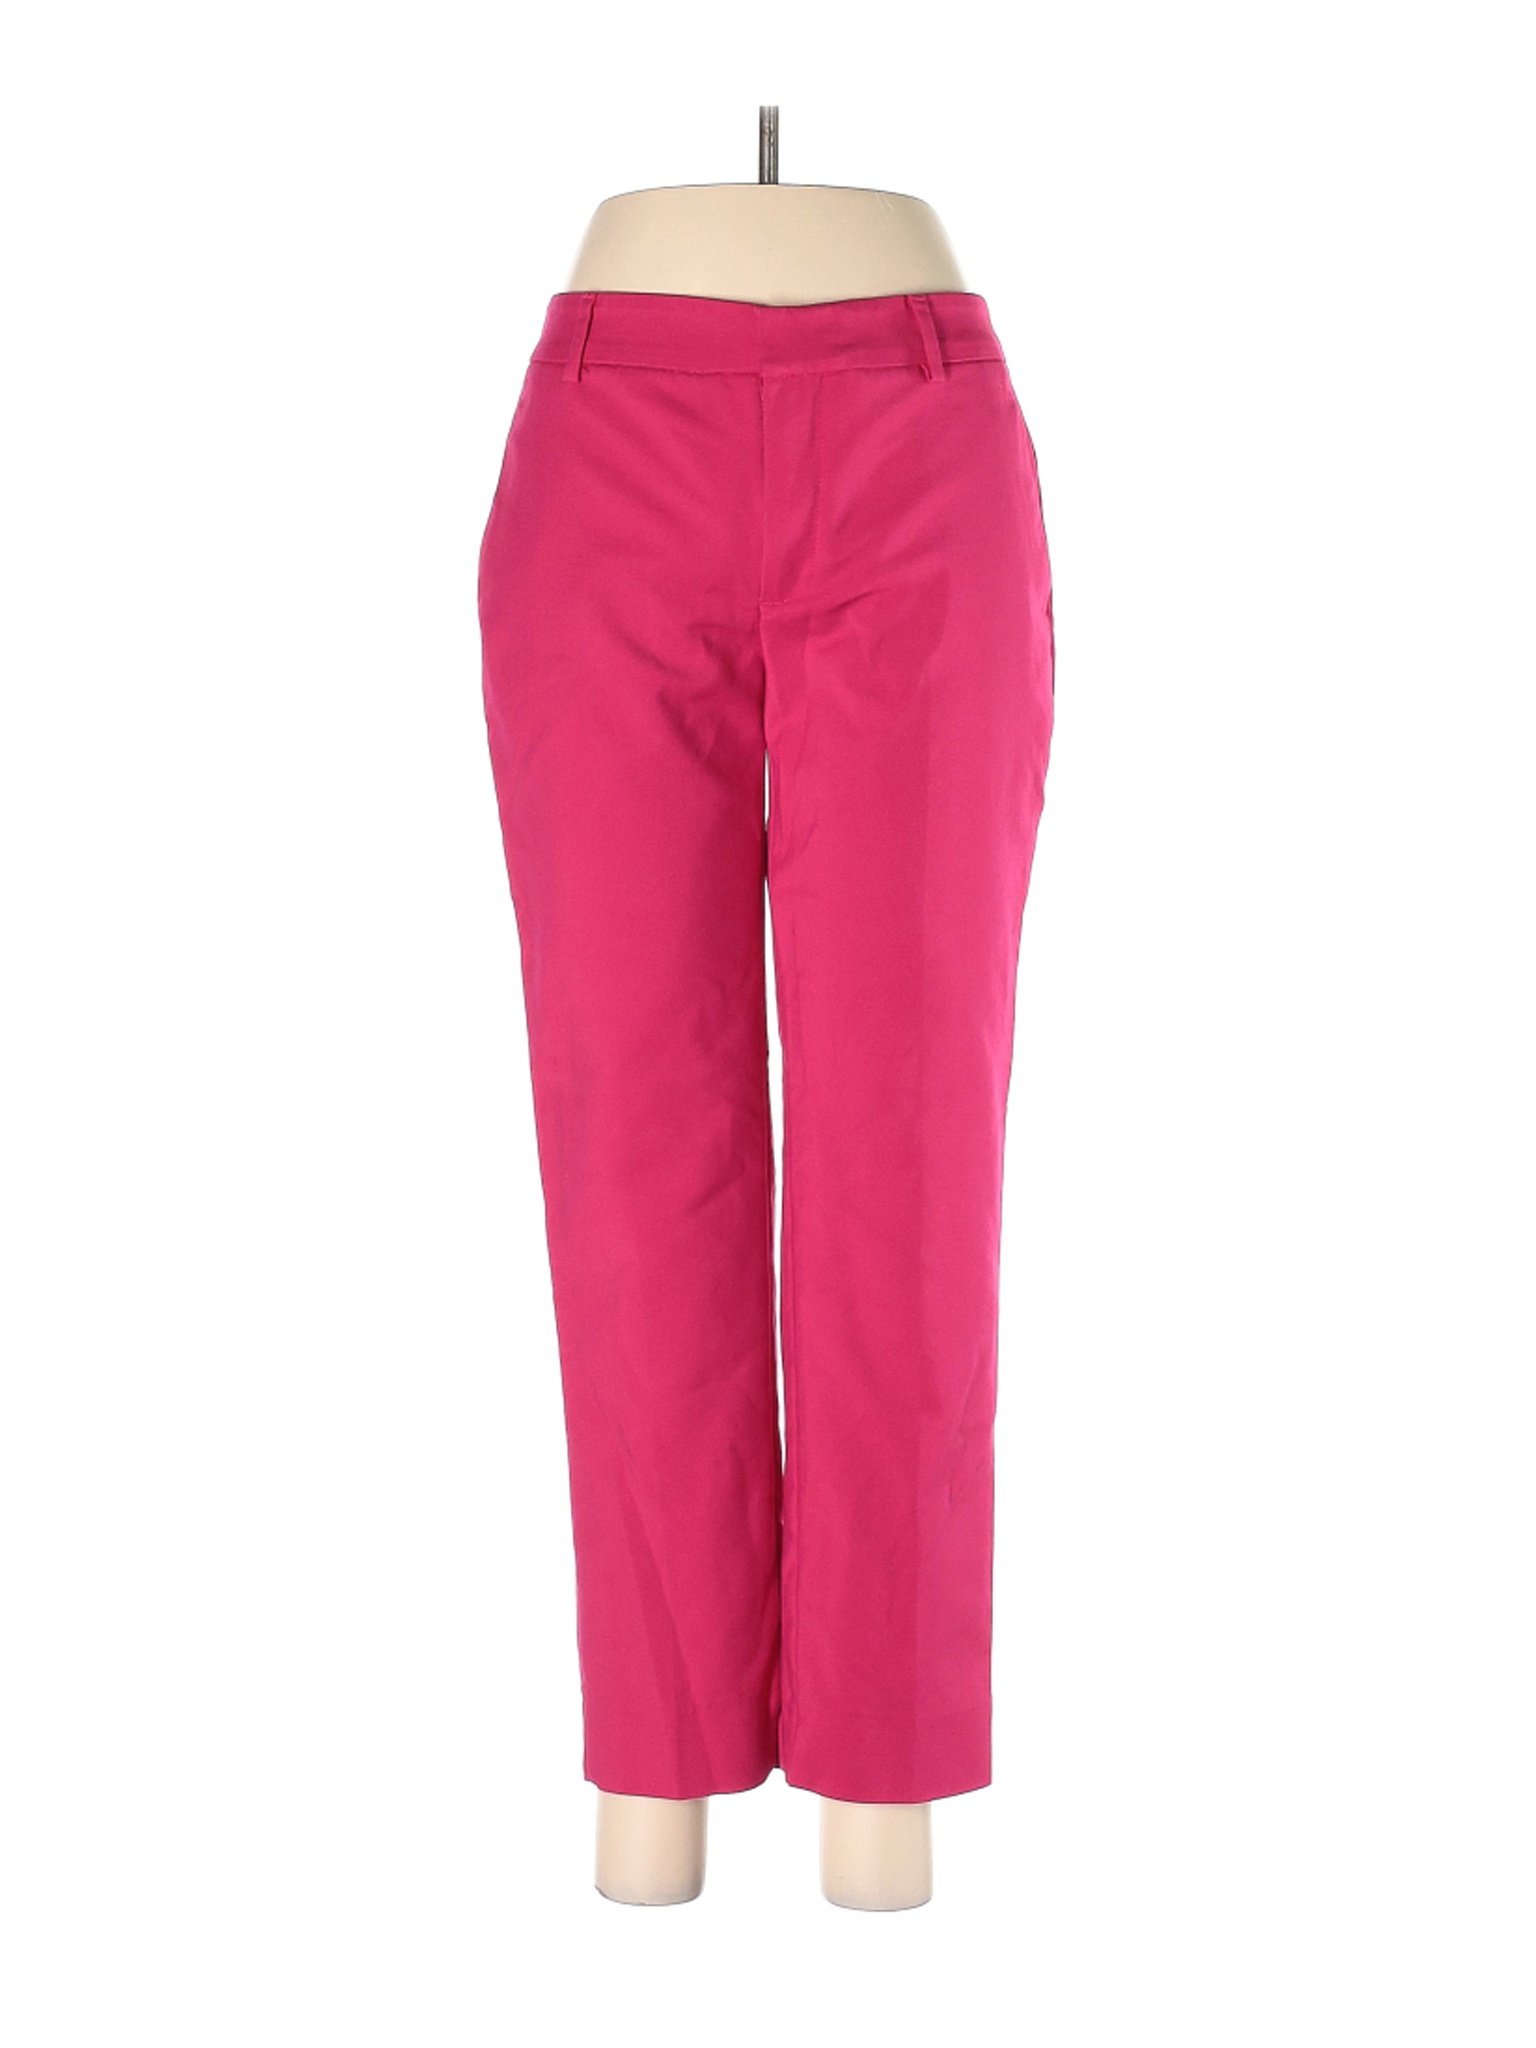 Zara Women Pink Dress Pants 8 | eBay